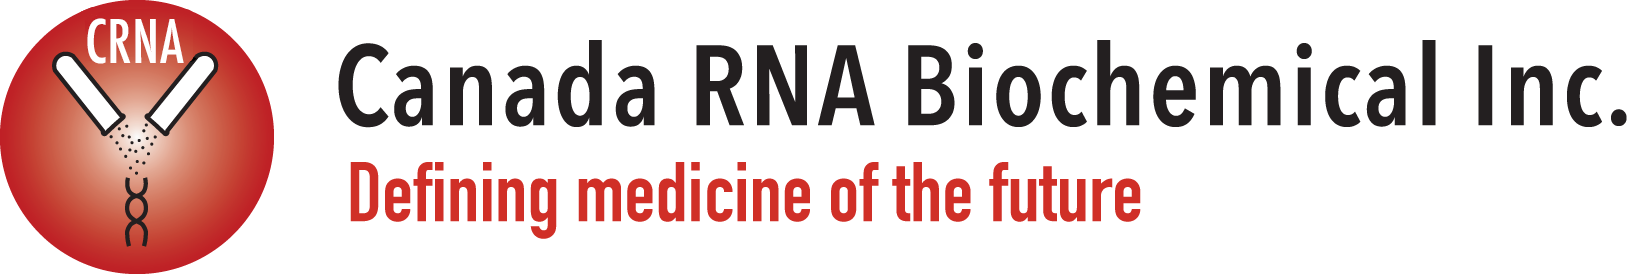 Canada RNA Biomedical Inc.